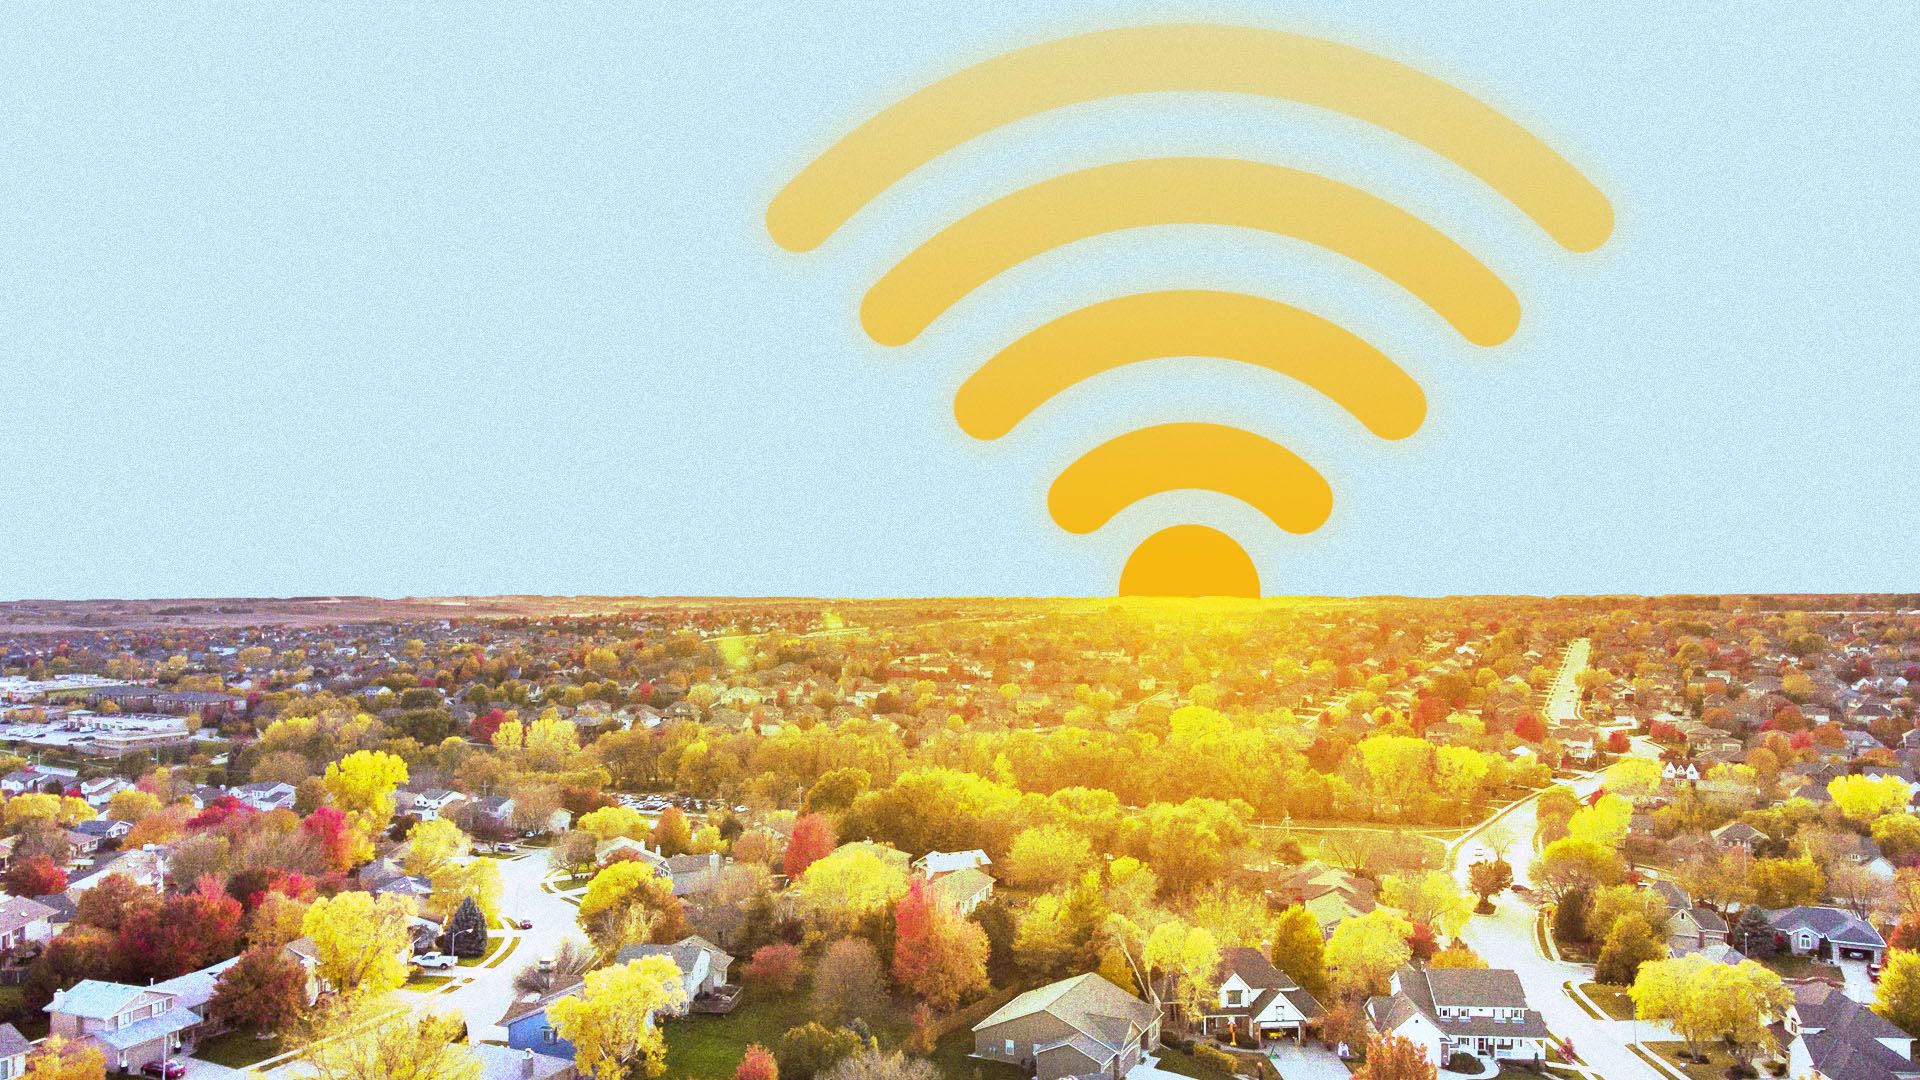 A wireless signal symbol shining over a suburban landscape